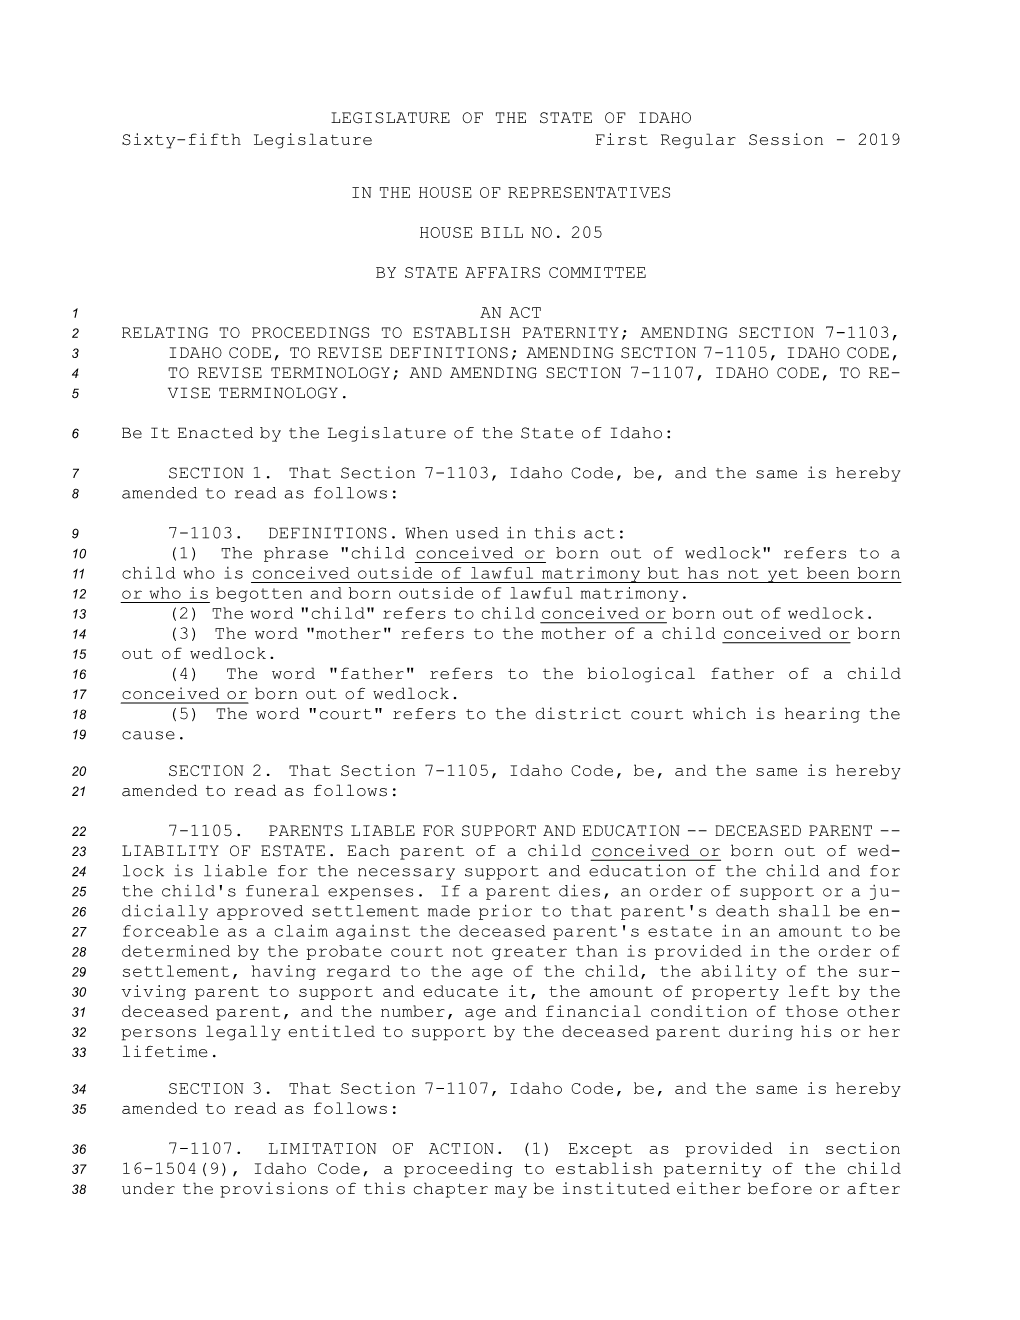 House Bill No.205 (2019)